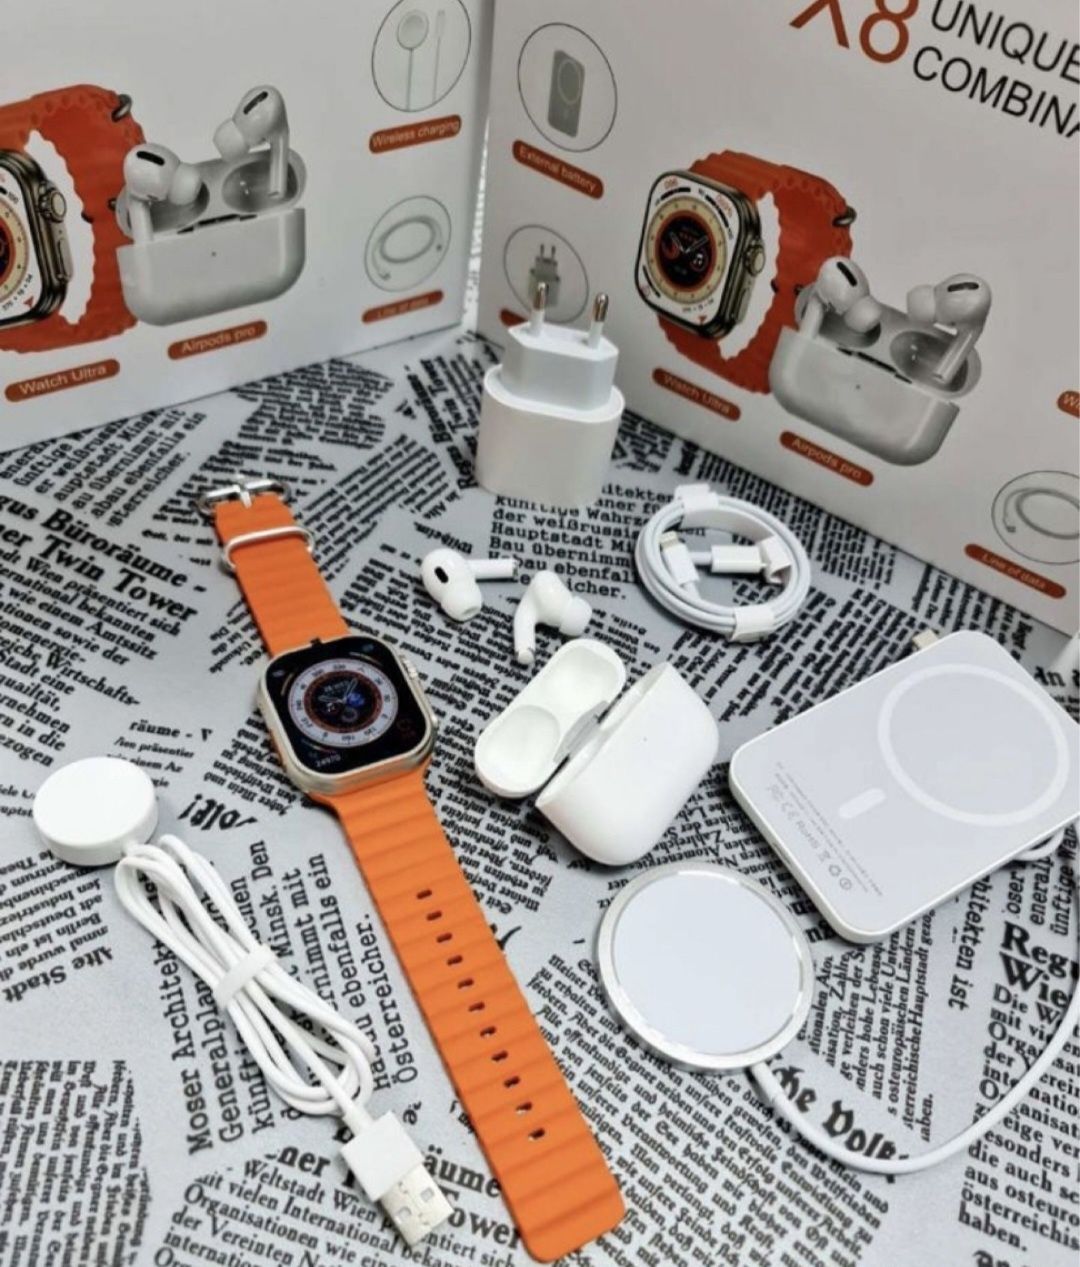 Apple watch 8 ultra набор 6 в 1